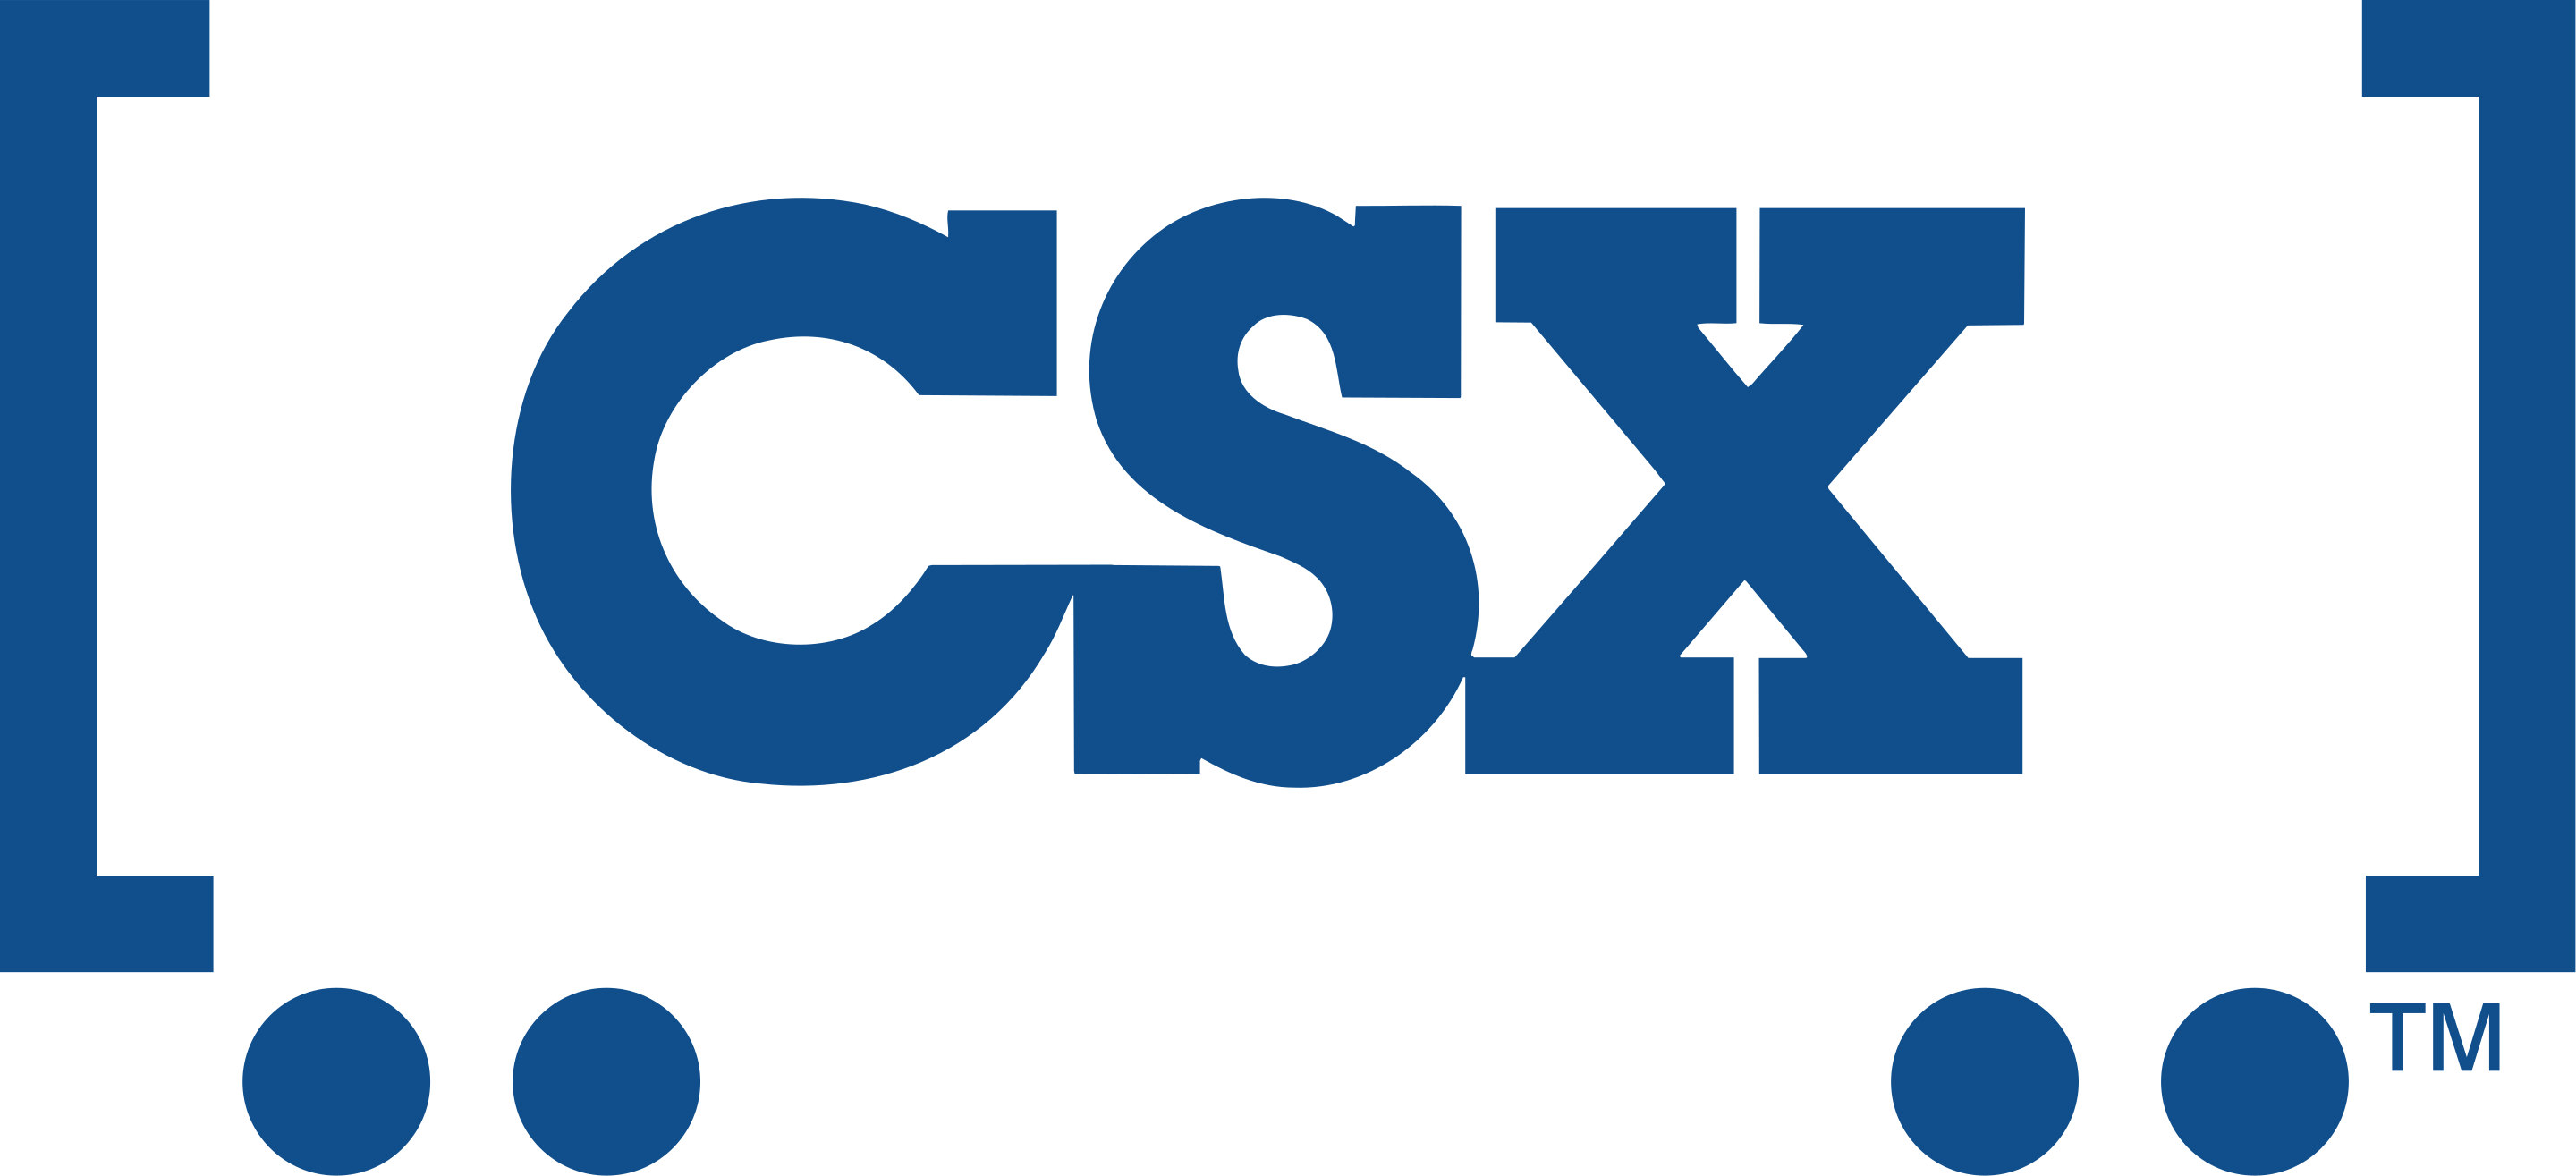 CSX_transp_logo